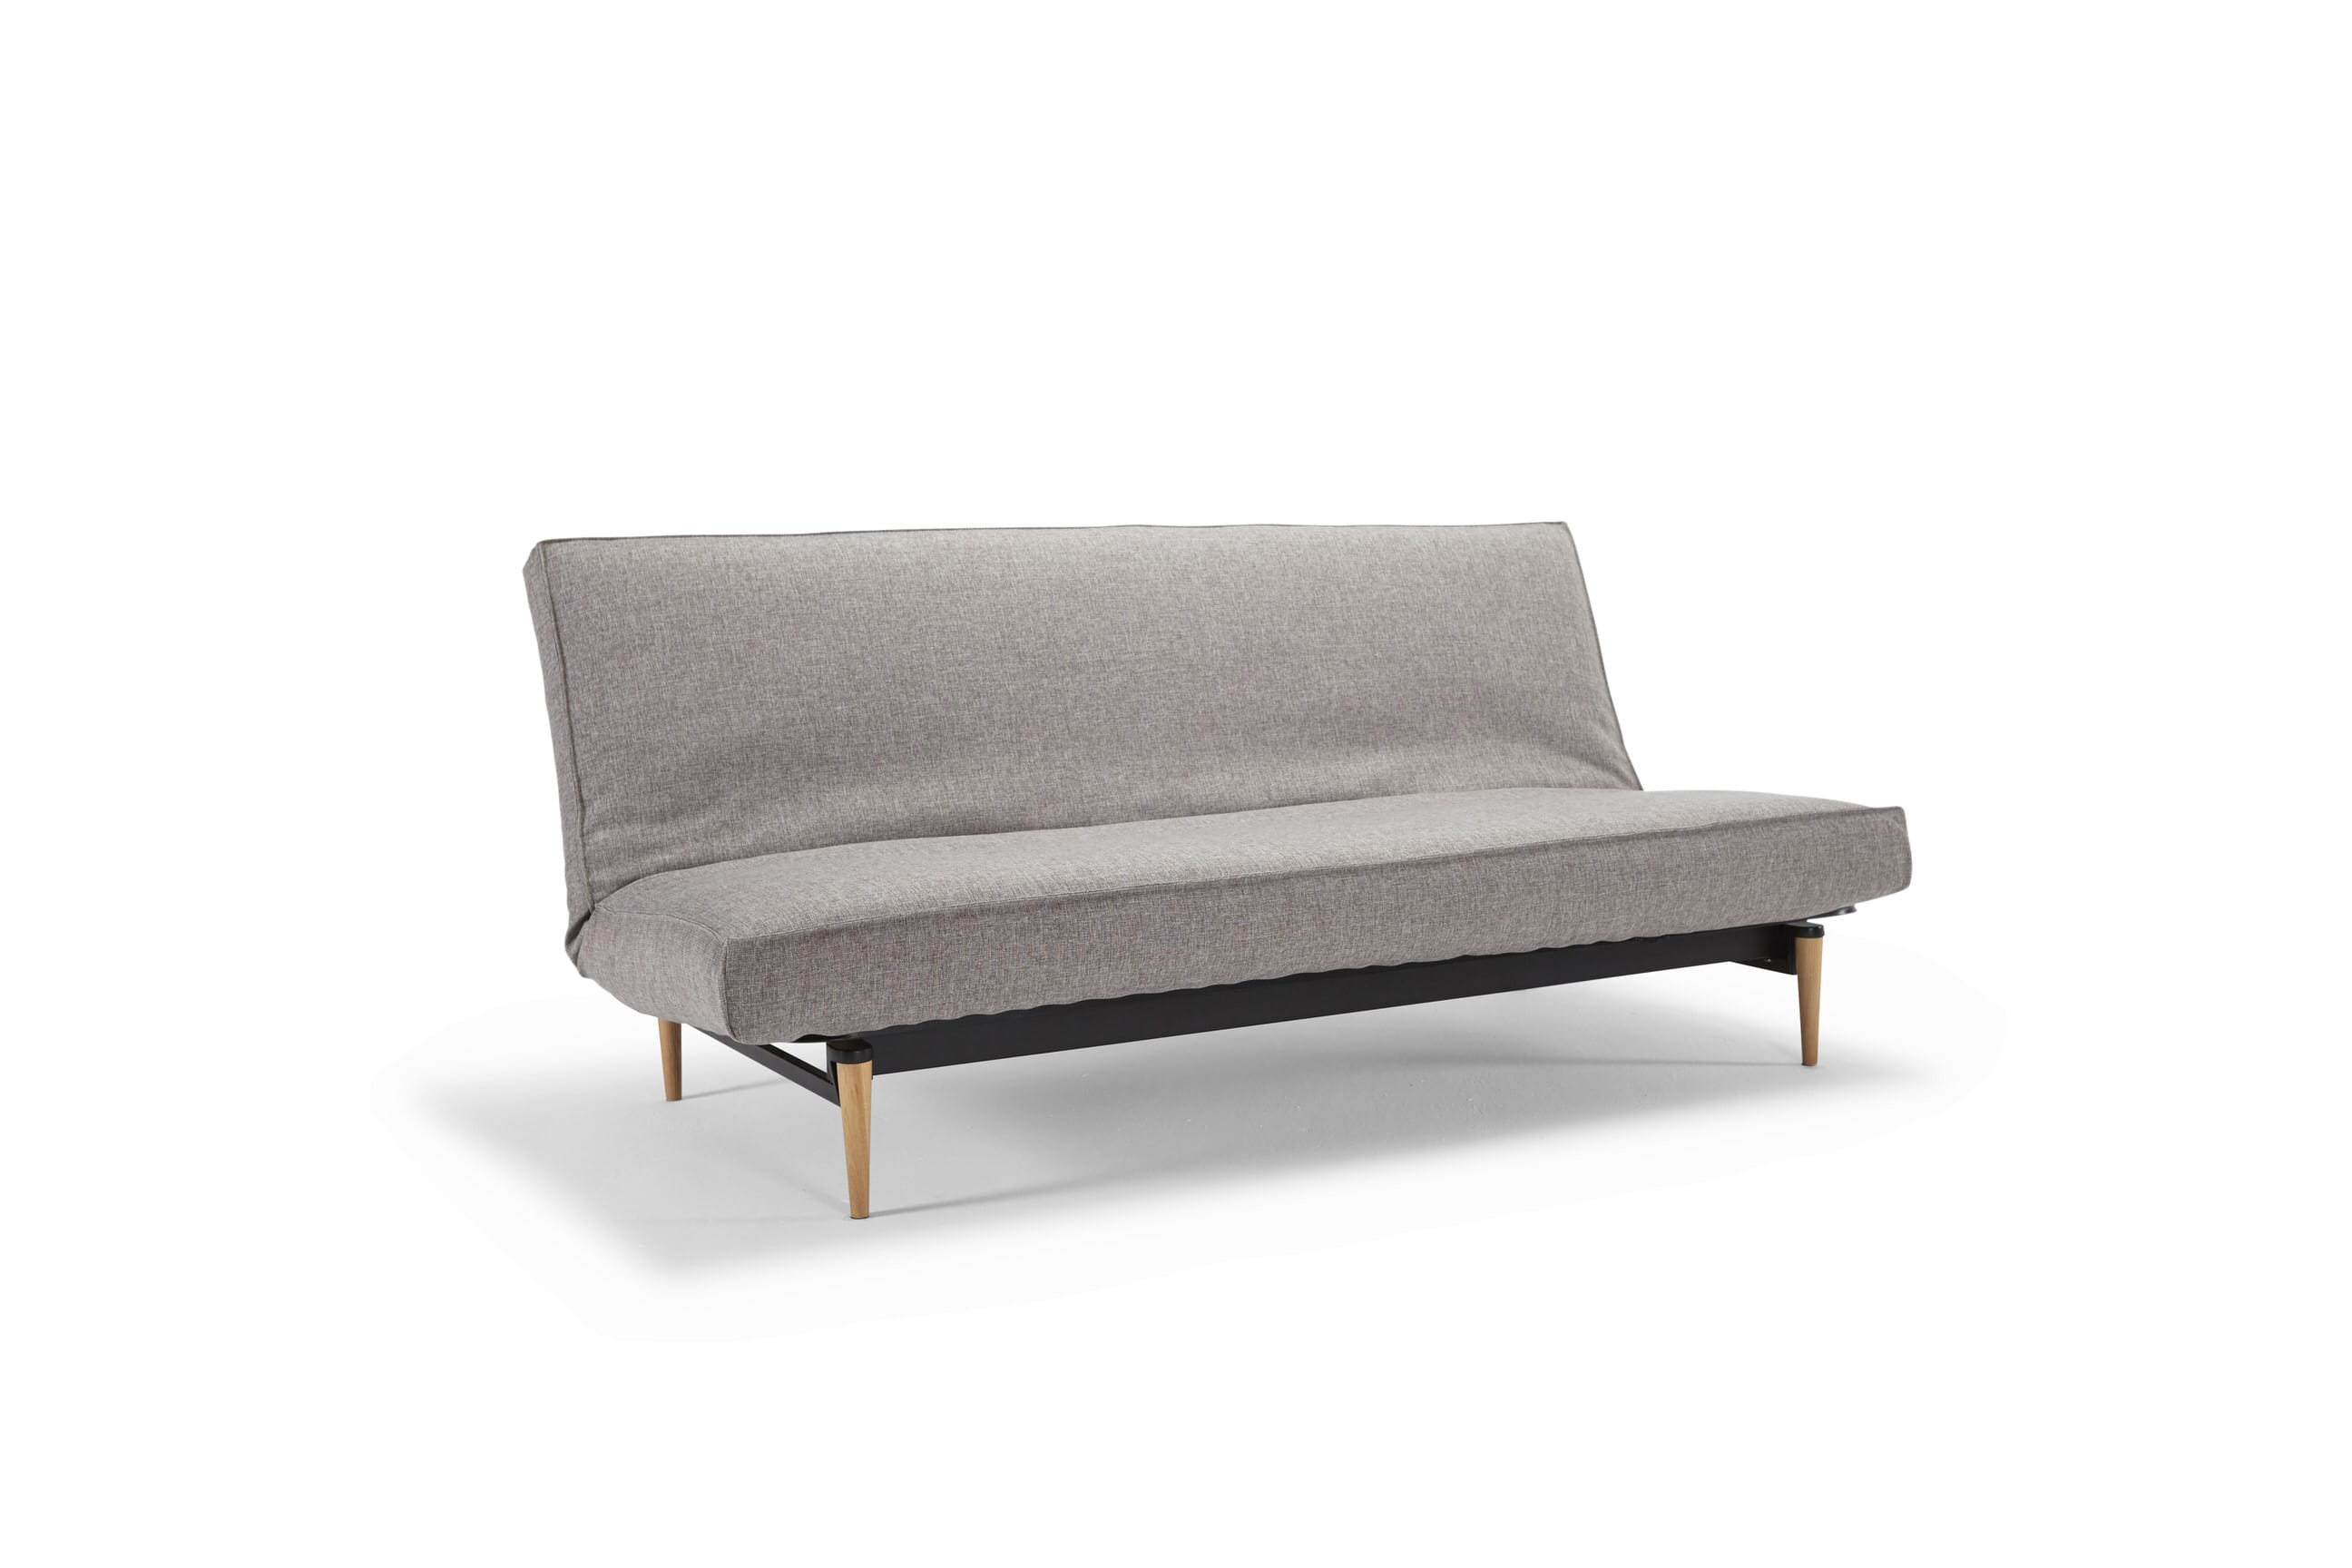 interferens tredobbelt Mob Colpus Futon Sofa Bed (Full XL) by Innovation